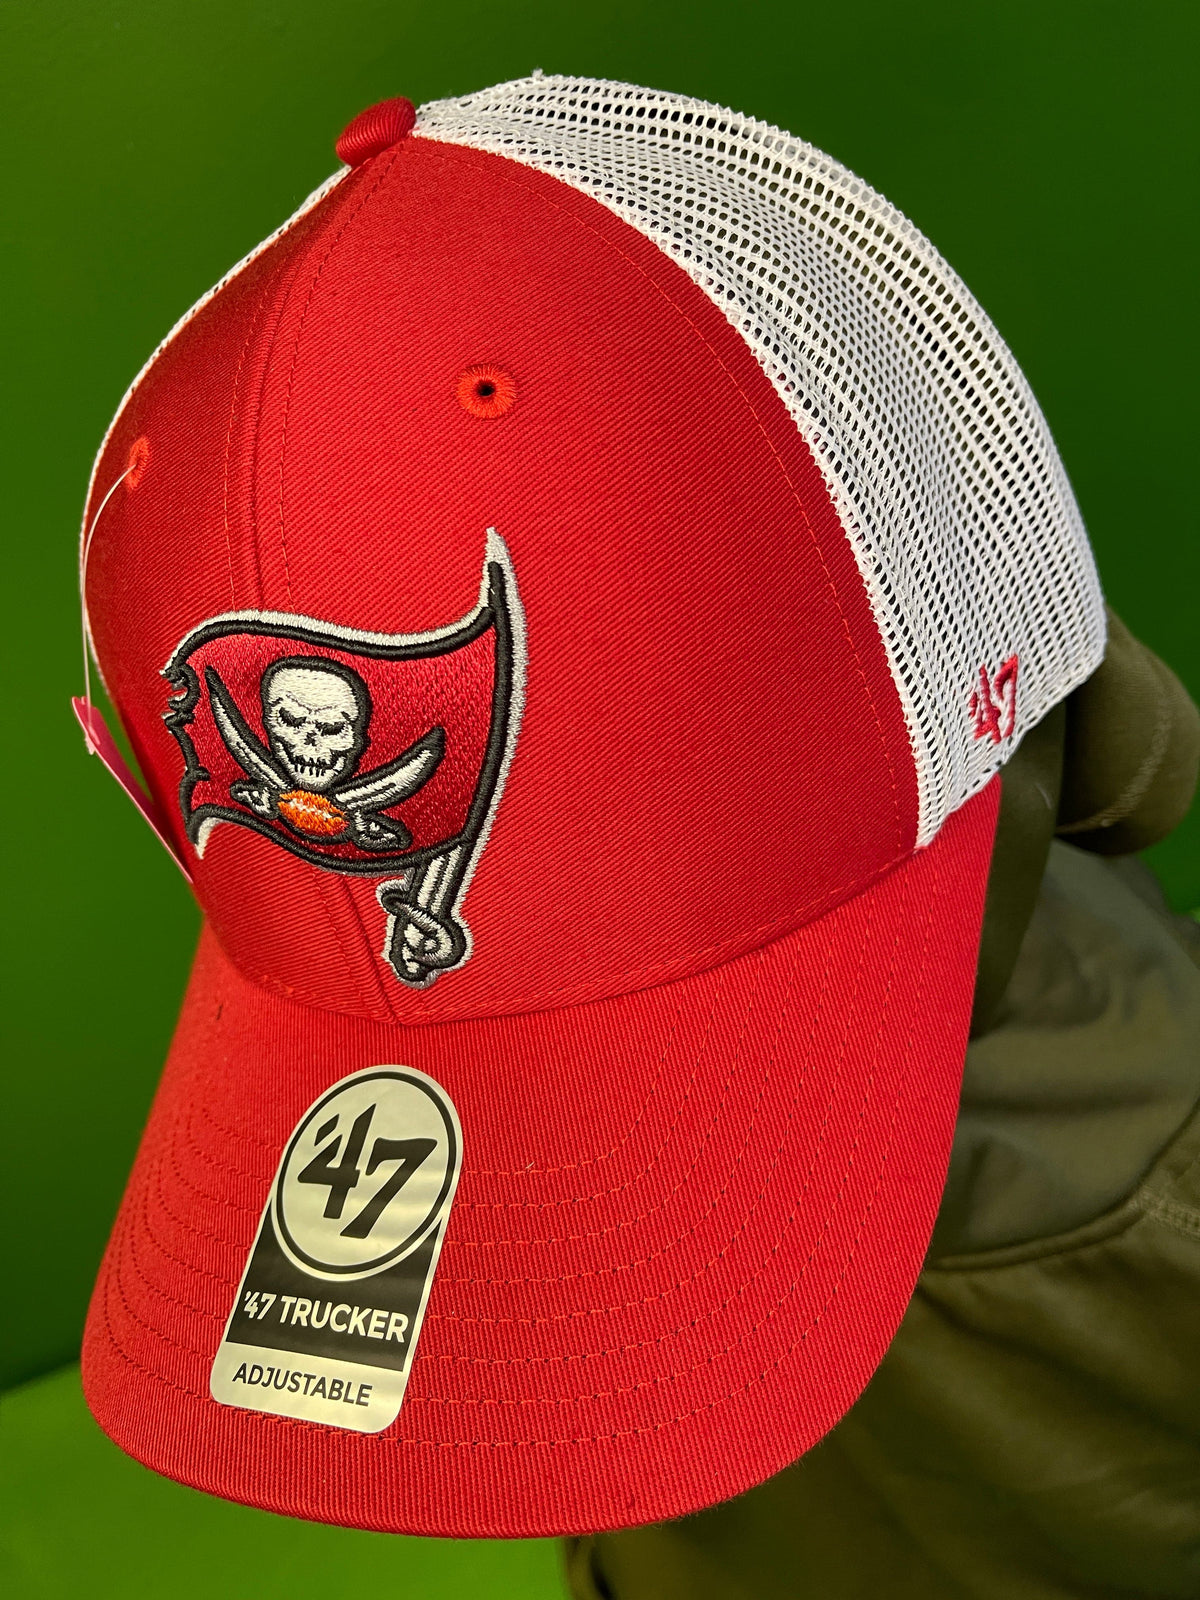 NFL Tampa Bay Buccaneers '47 Trucker Mesh Strapback Hat/Cap OSFM NWT